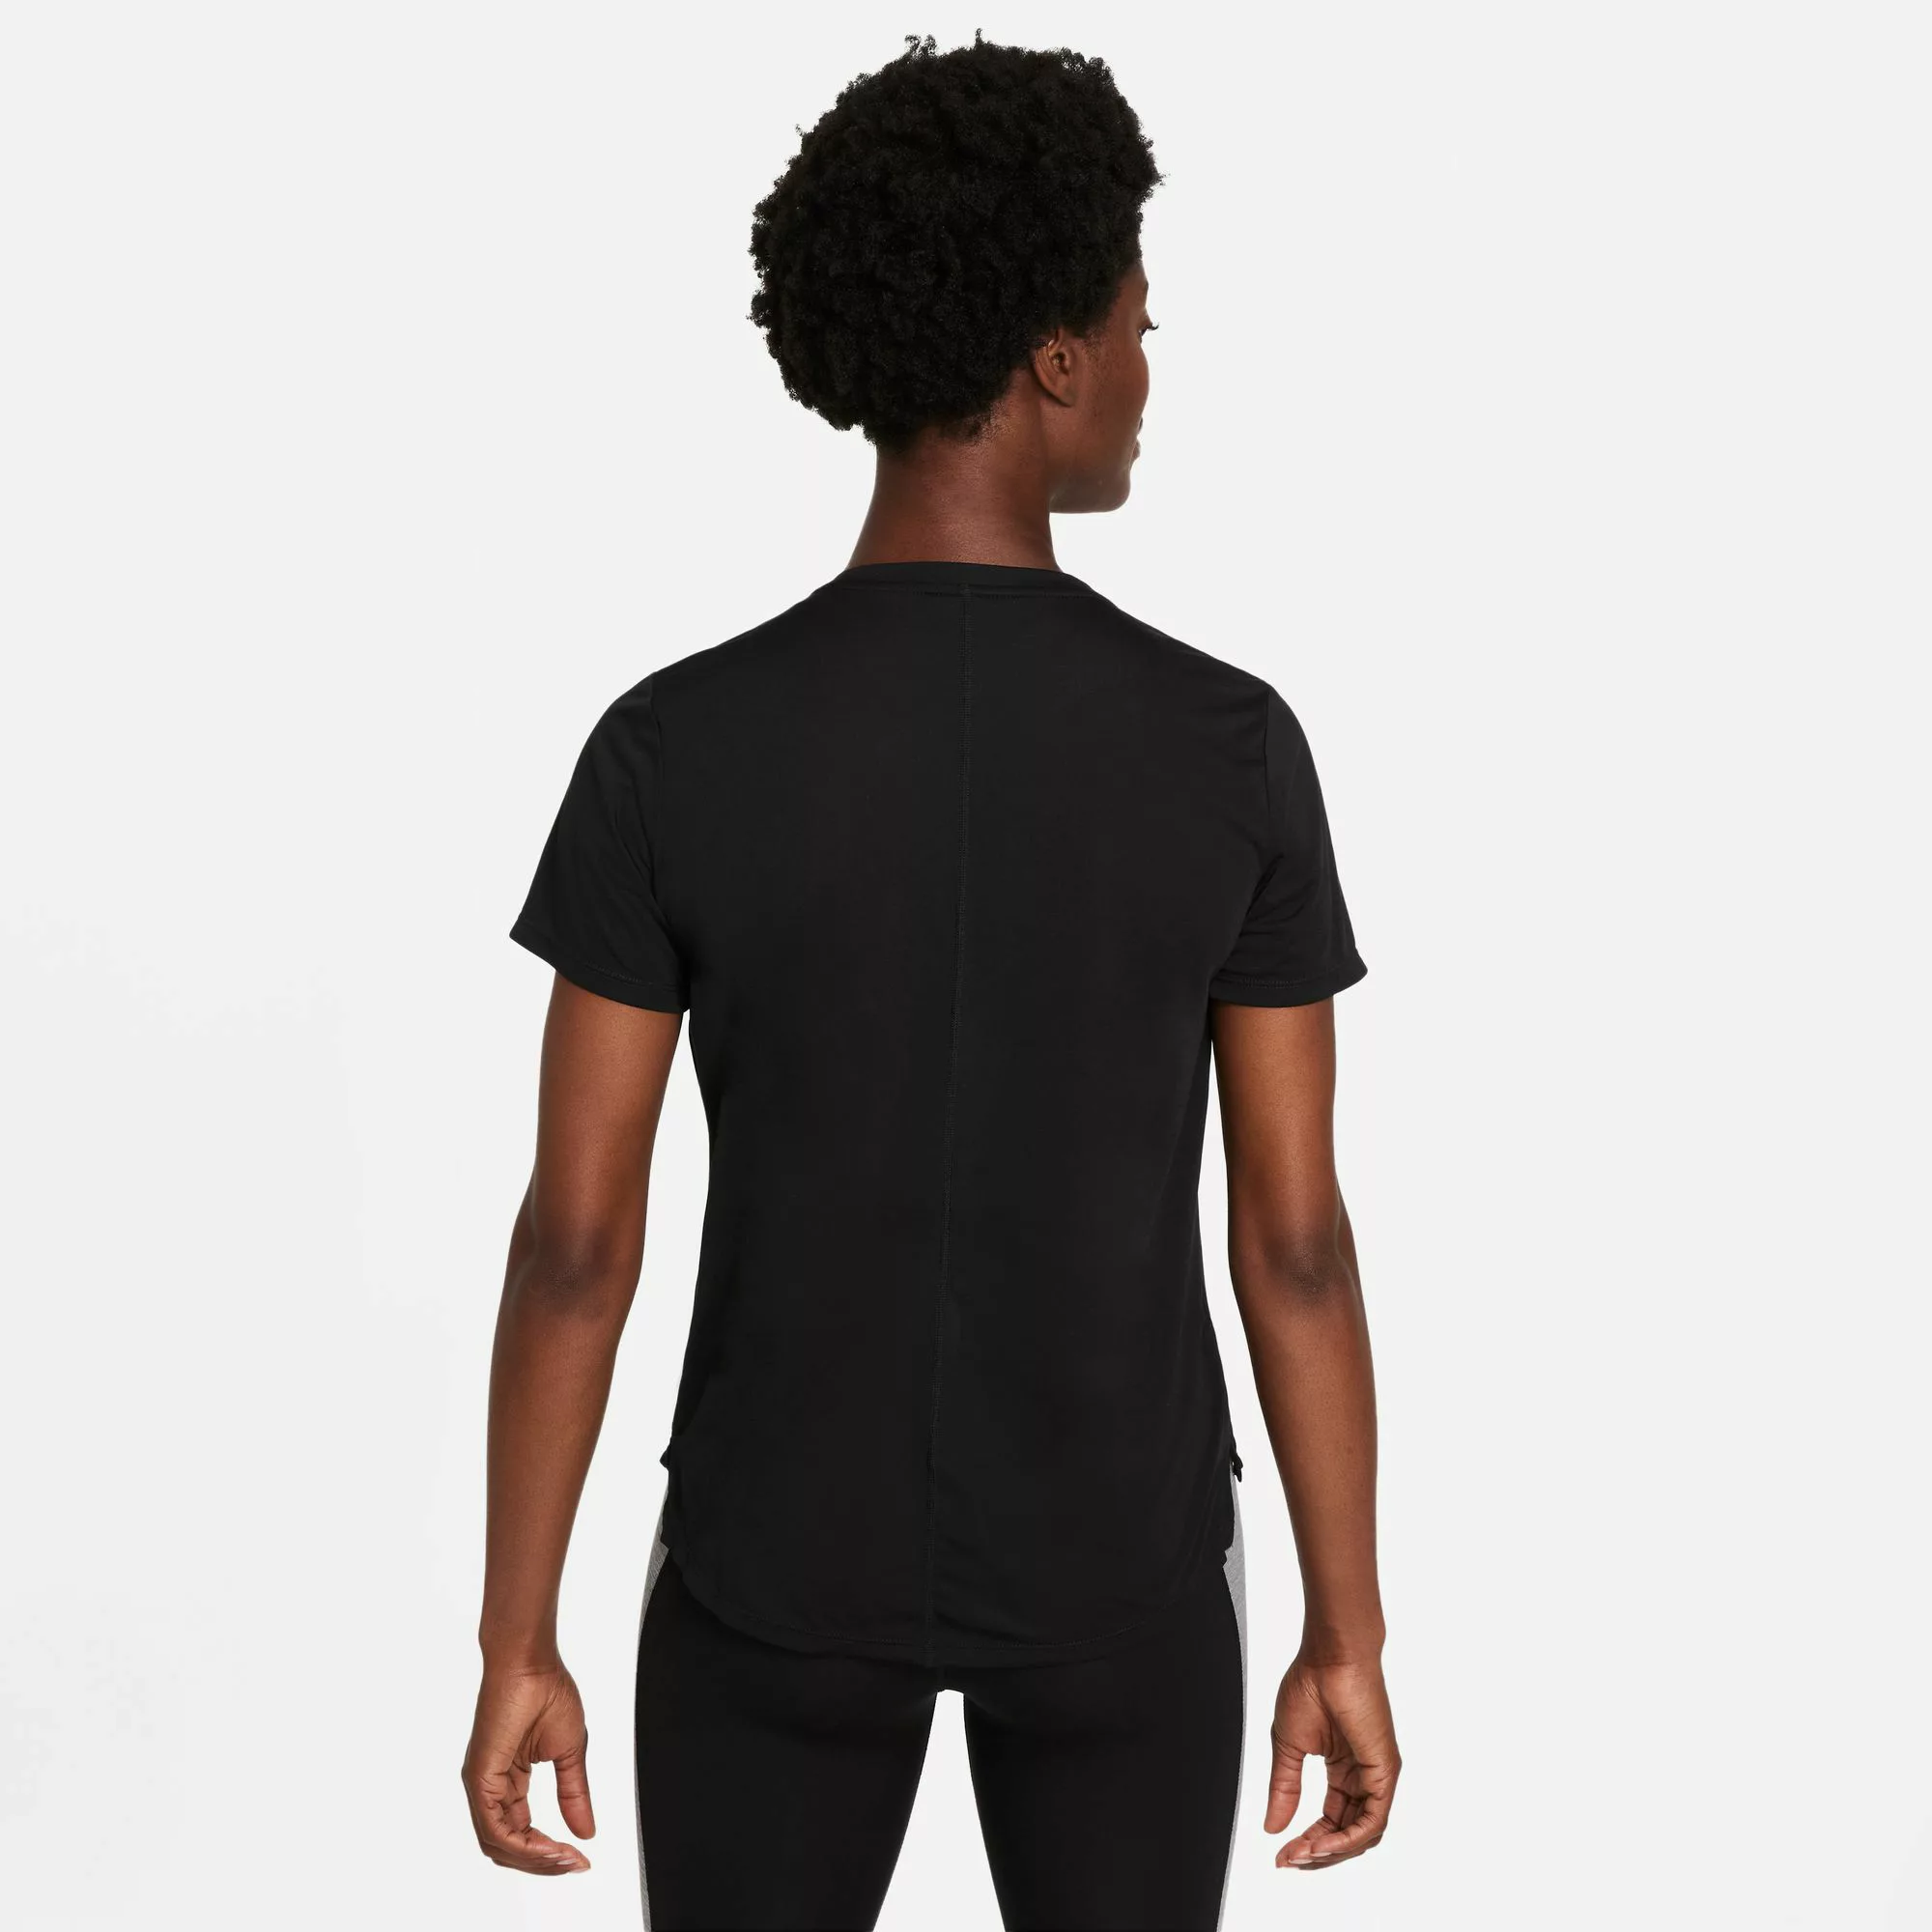 Nike Dri Fit One Kurzarm T-shirt XS Black / White günstig online kaufen